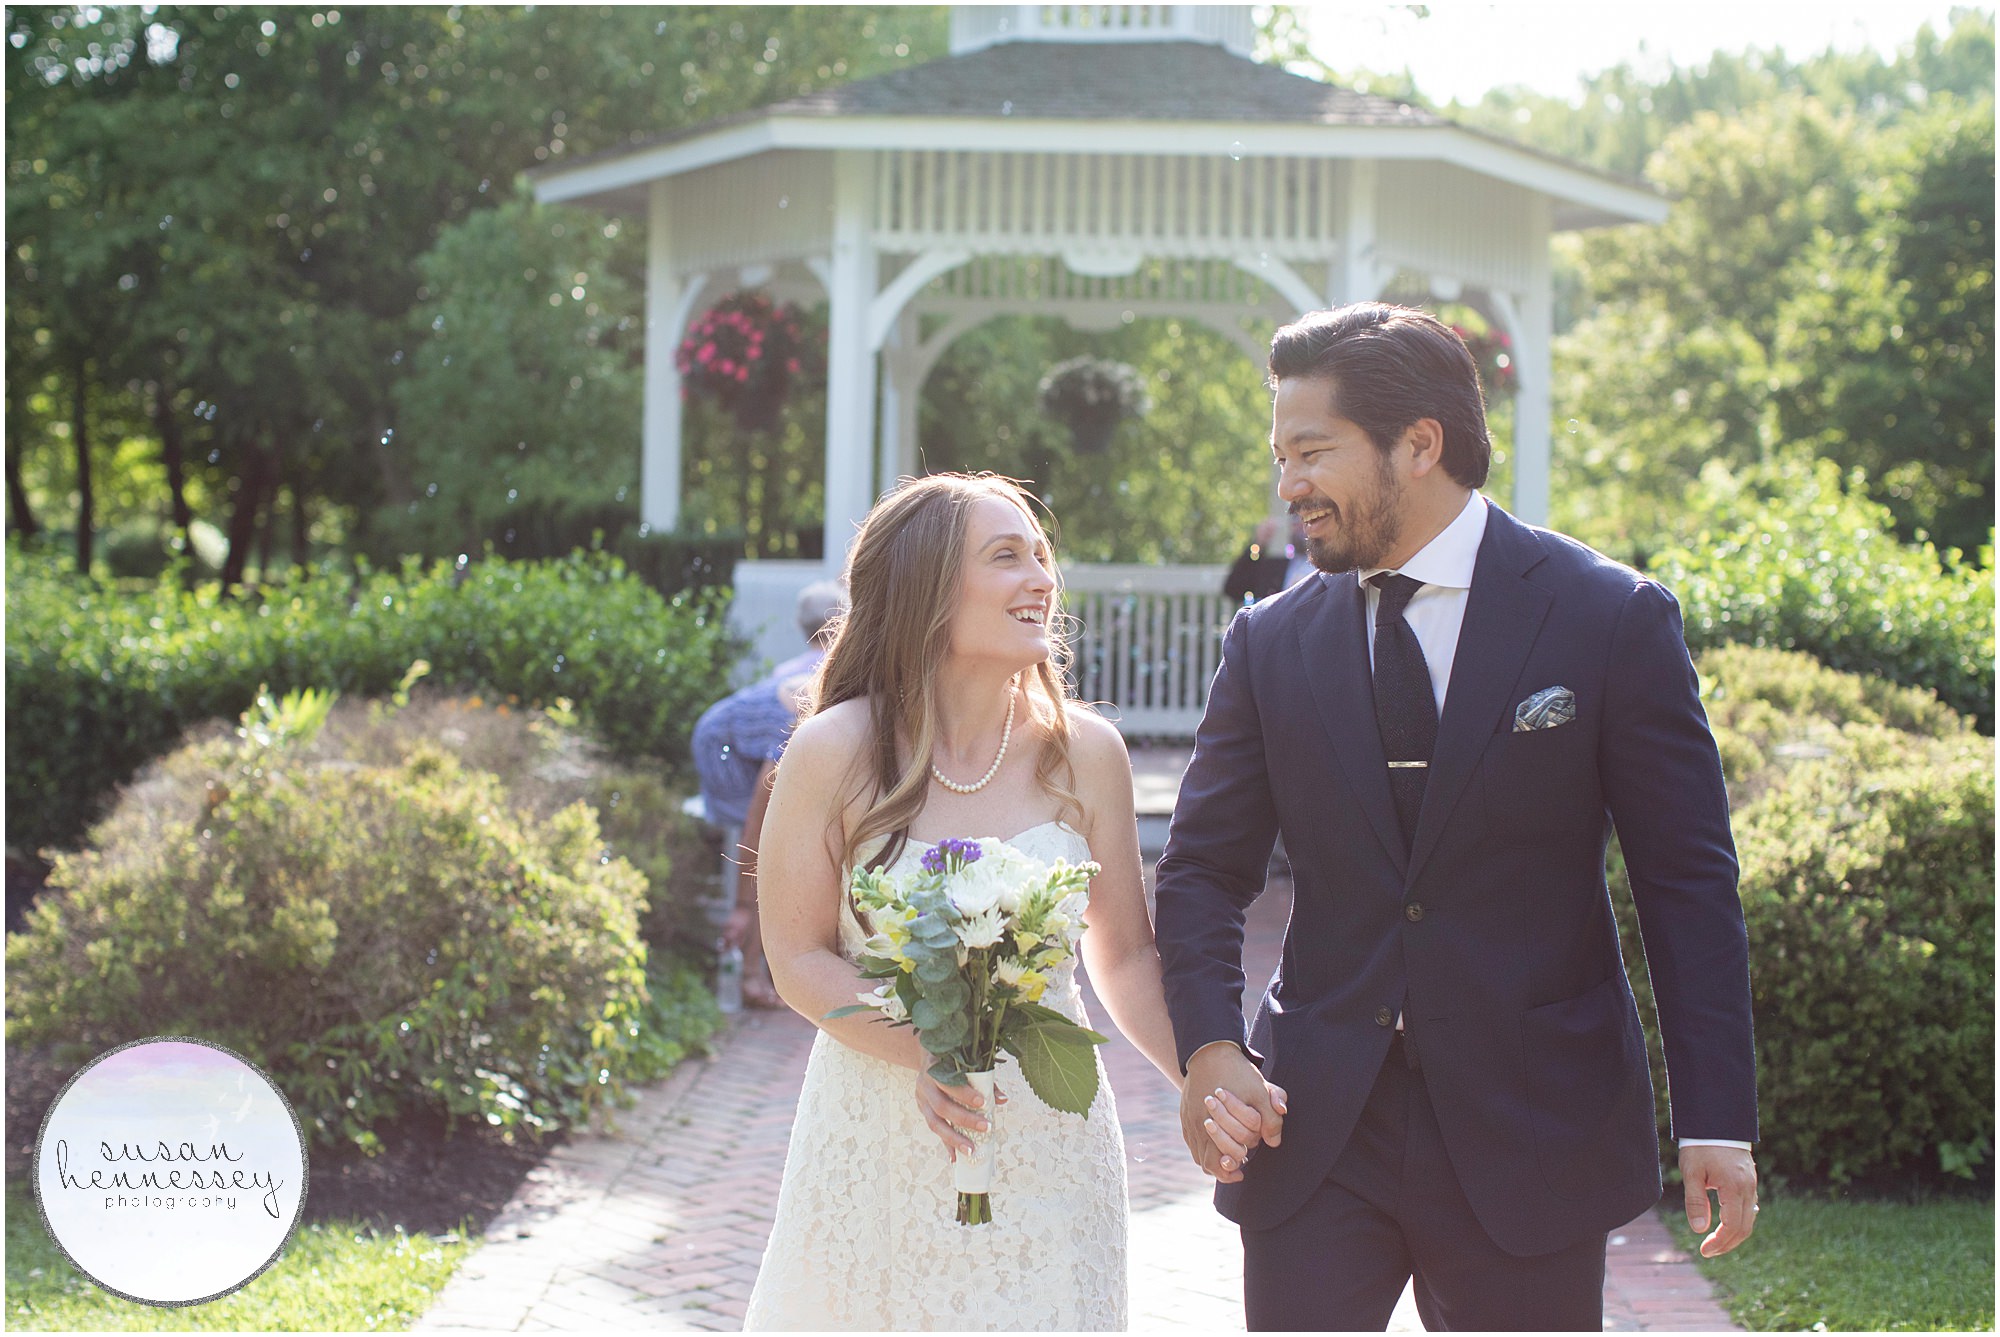 An intimate Summer wedding at Sayen Gardens